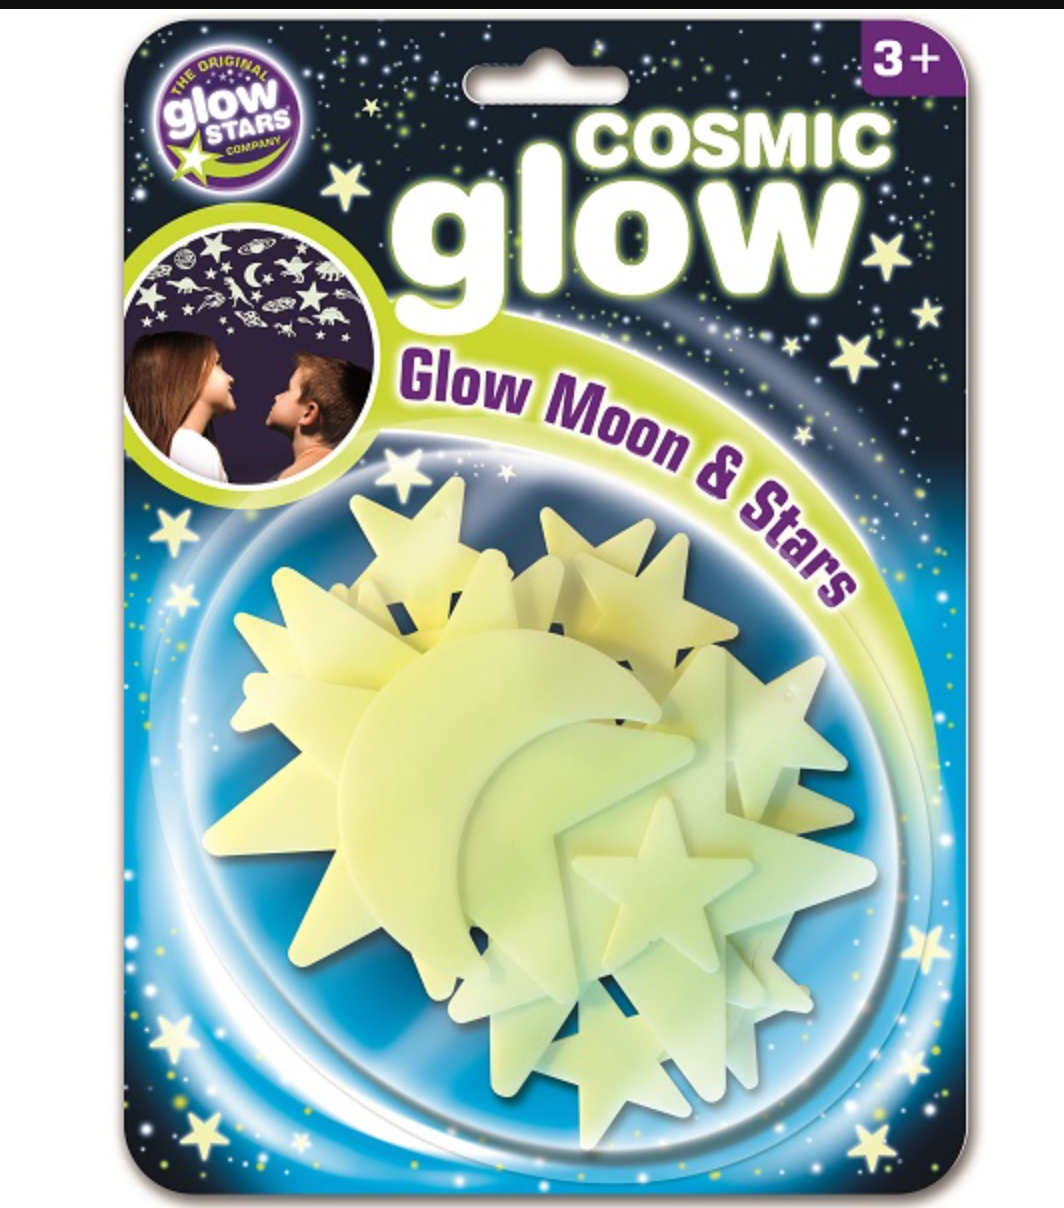 Cosmic Glow Moon & Stars